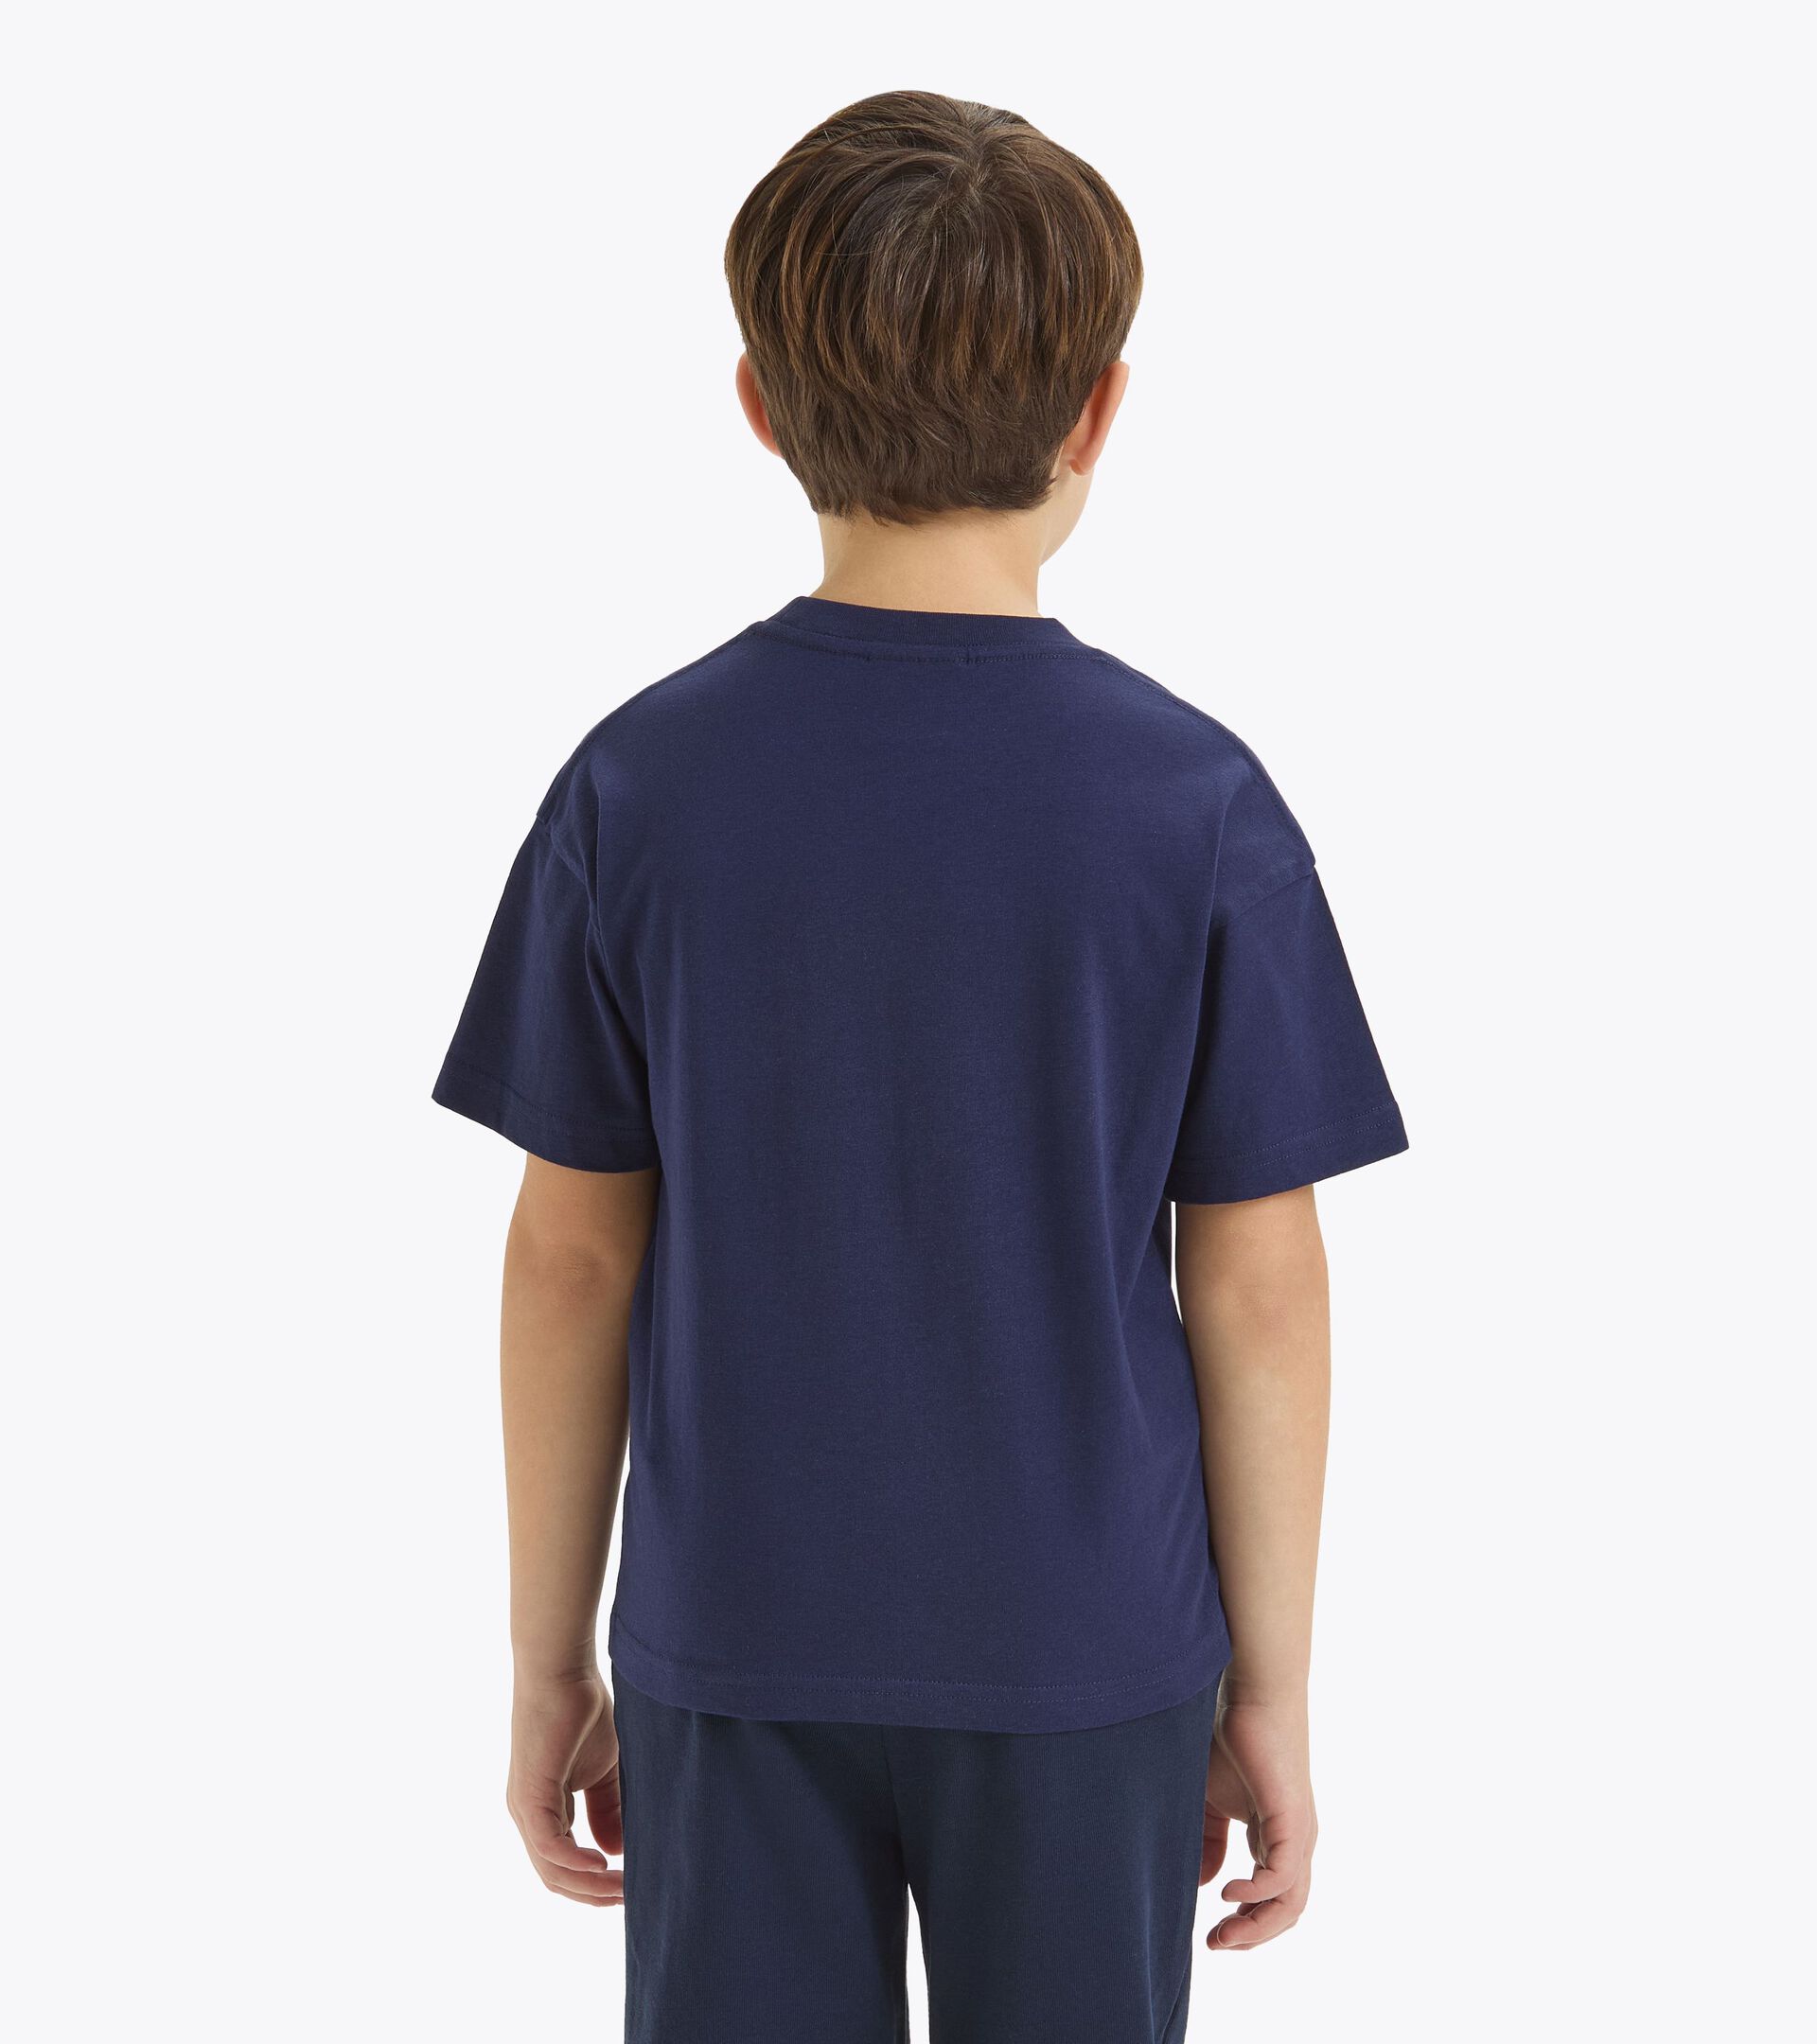 Camiseta deportiva - Niños y Niñas
 JU.T-SHIRT SS BL AZUL CHAQUETON - Diadora